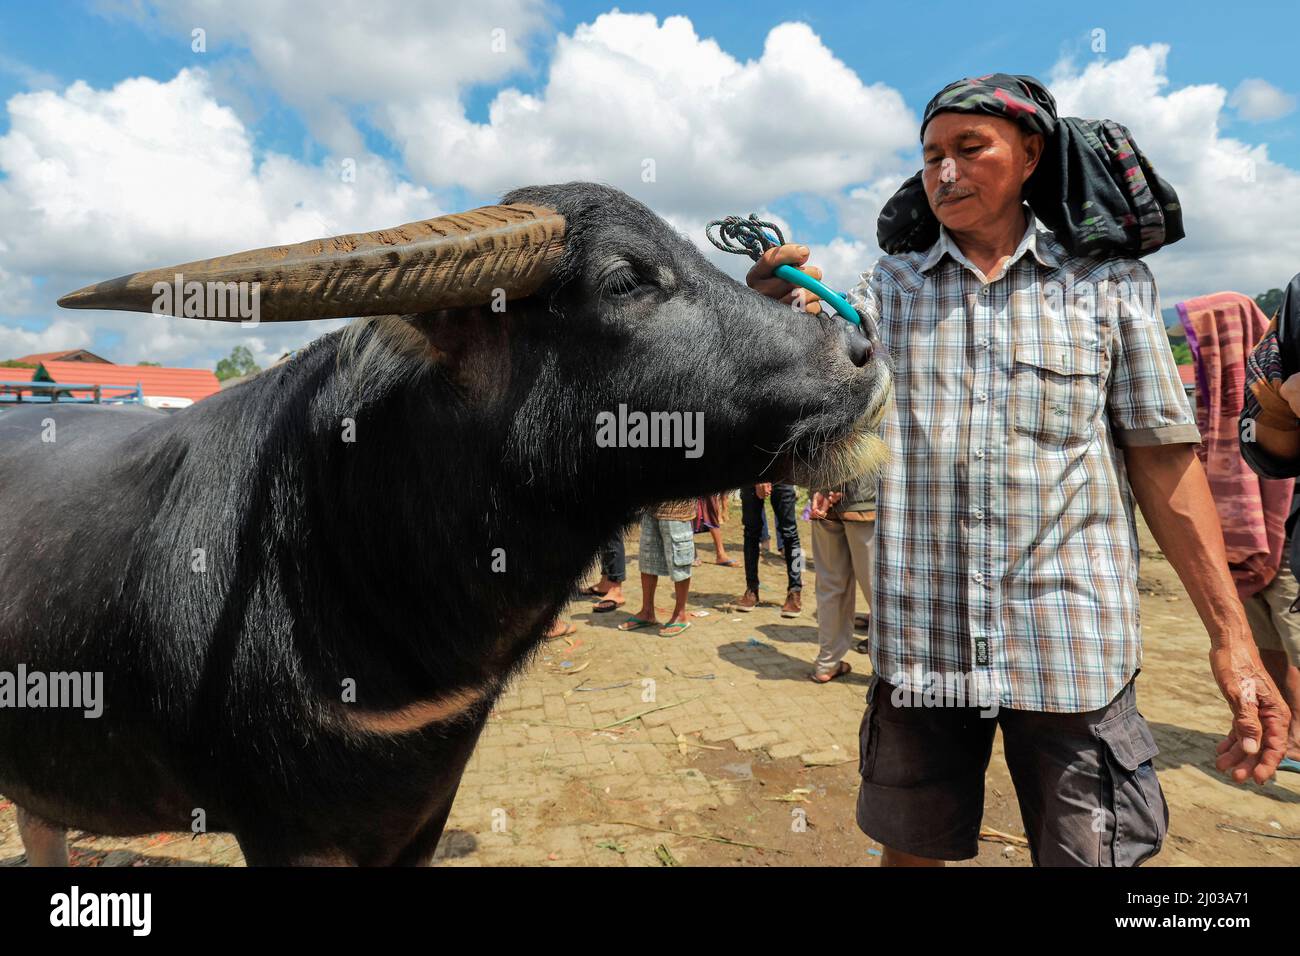 Man and buffalo at Asia's largest buffalo market, Bolu near the northern capital, Bolu, Rantepao, Toraja, South Sulawesi, Indonesia Stock Photo